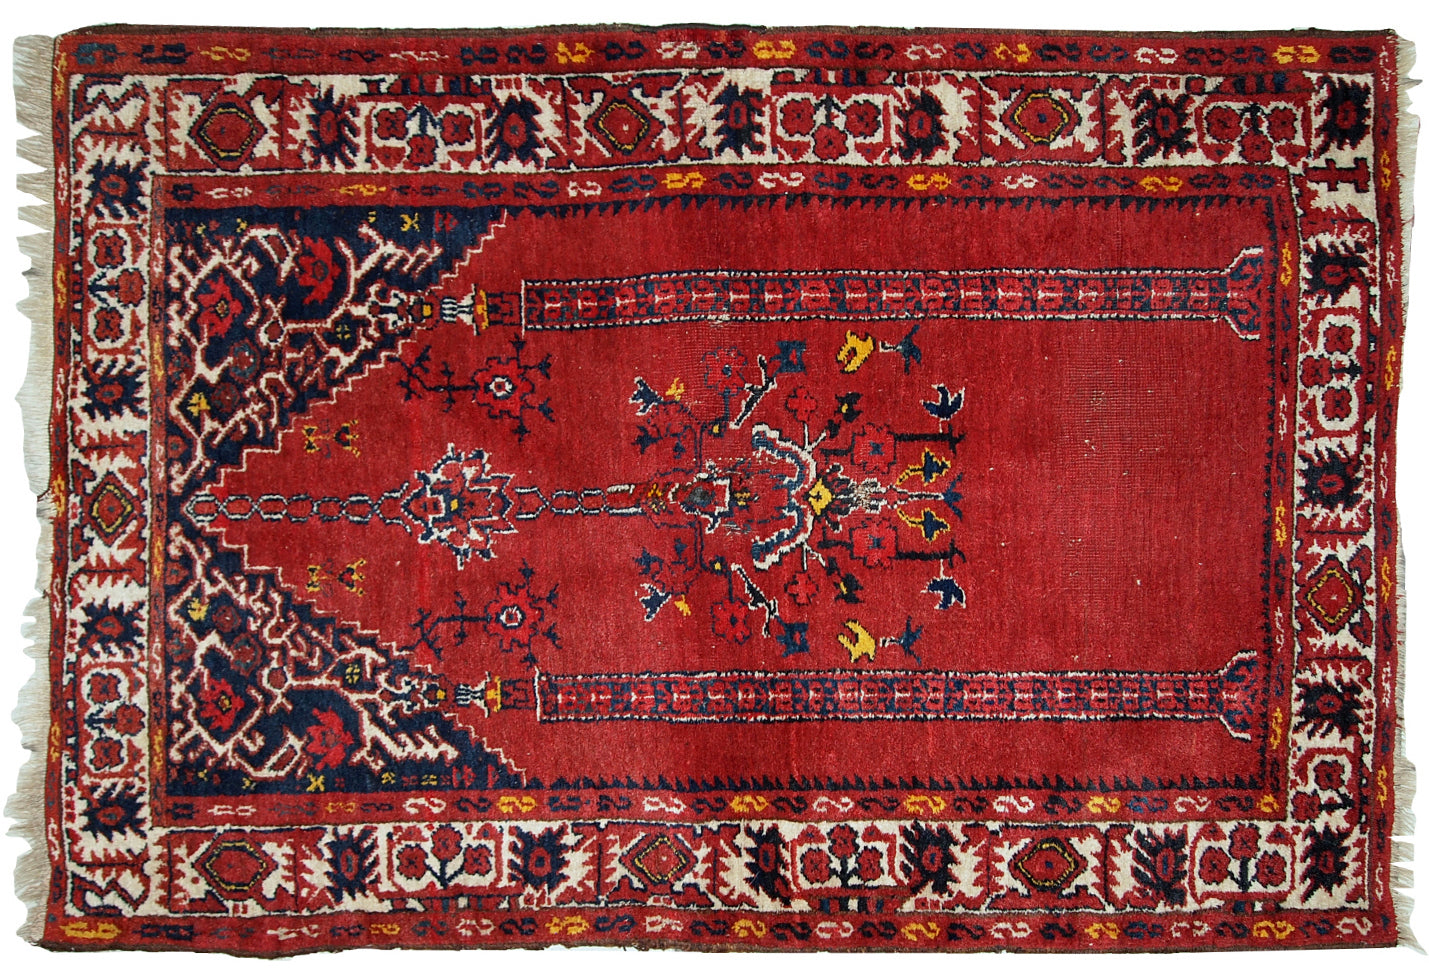 Handmade antique Turkish Anatolian prayer rug 2.6' x 3.7' (79cm x 112cm) 1940s - 1C563